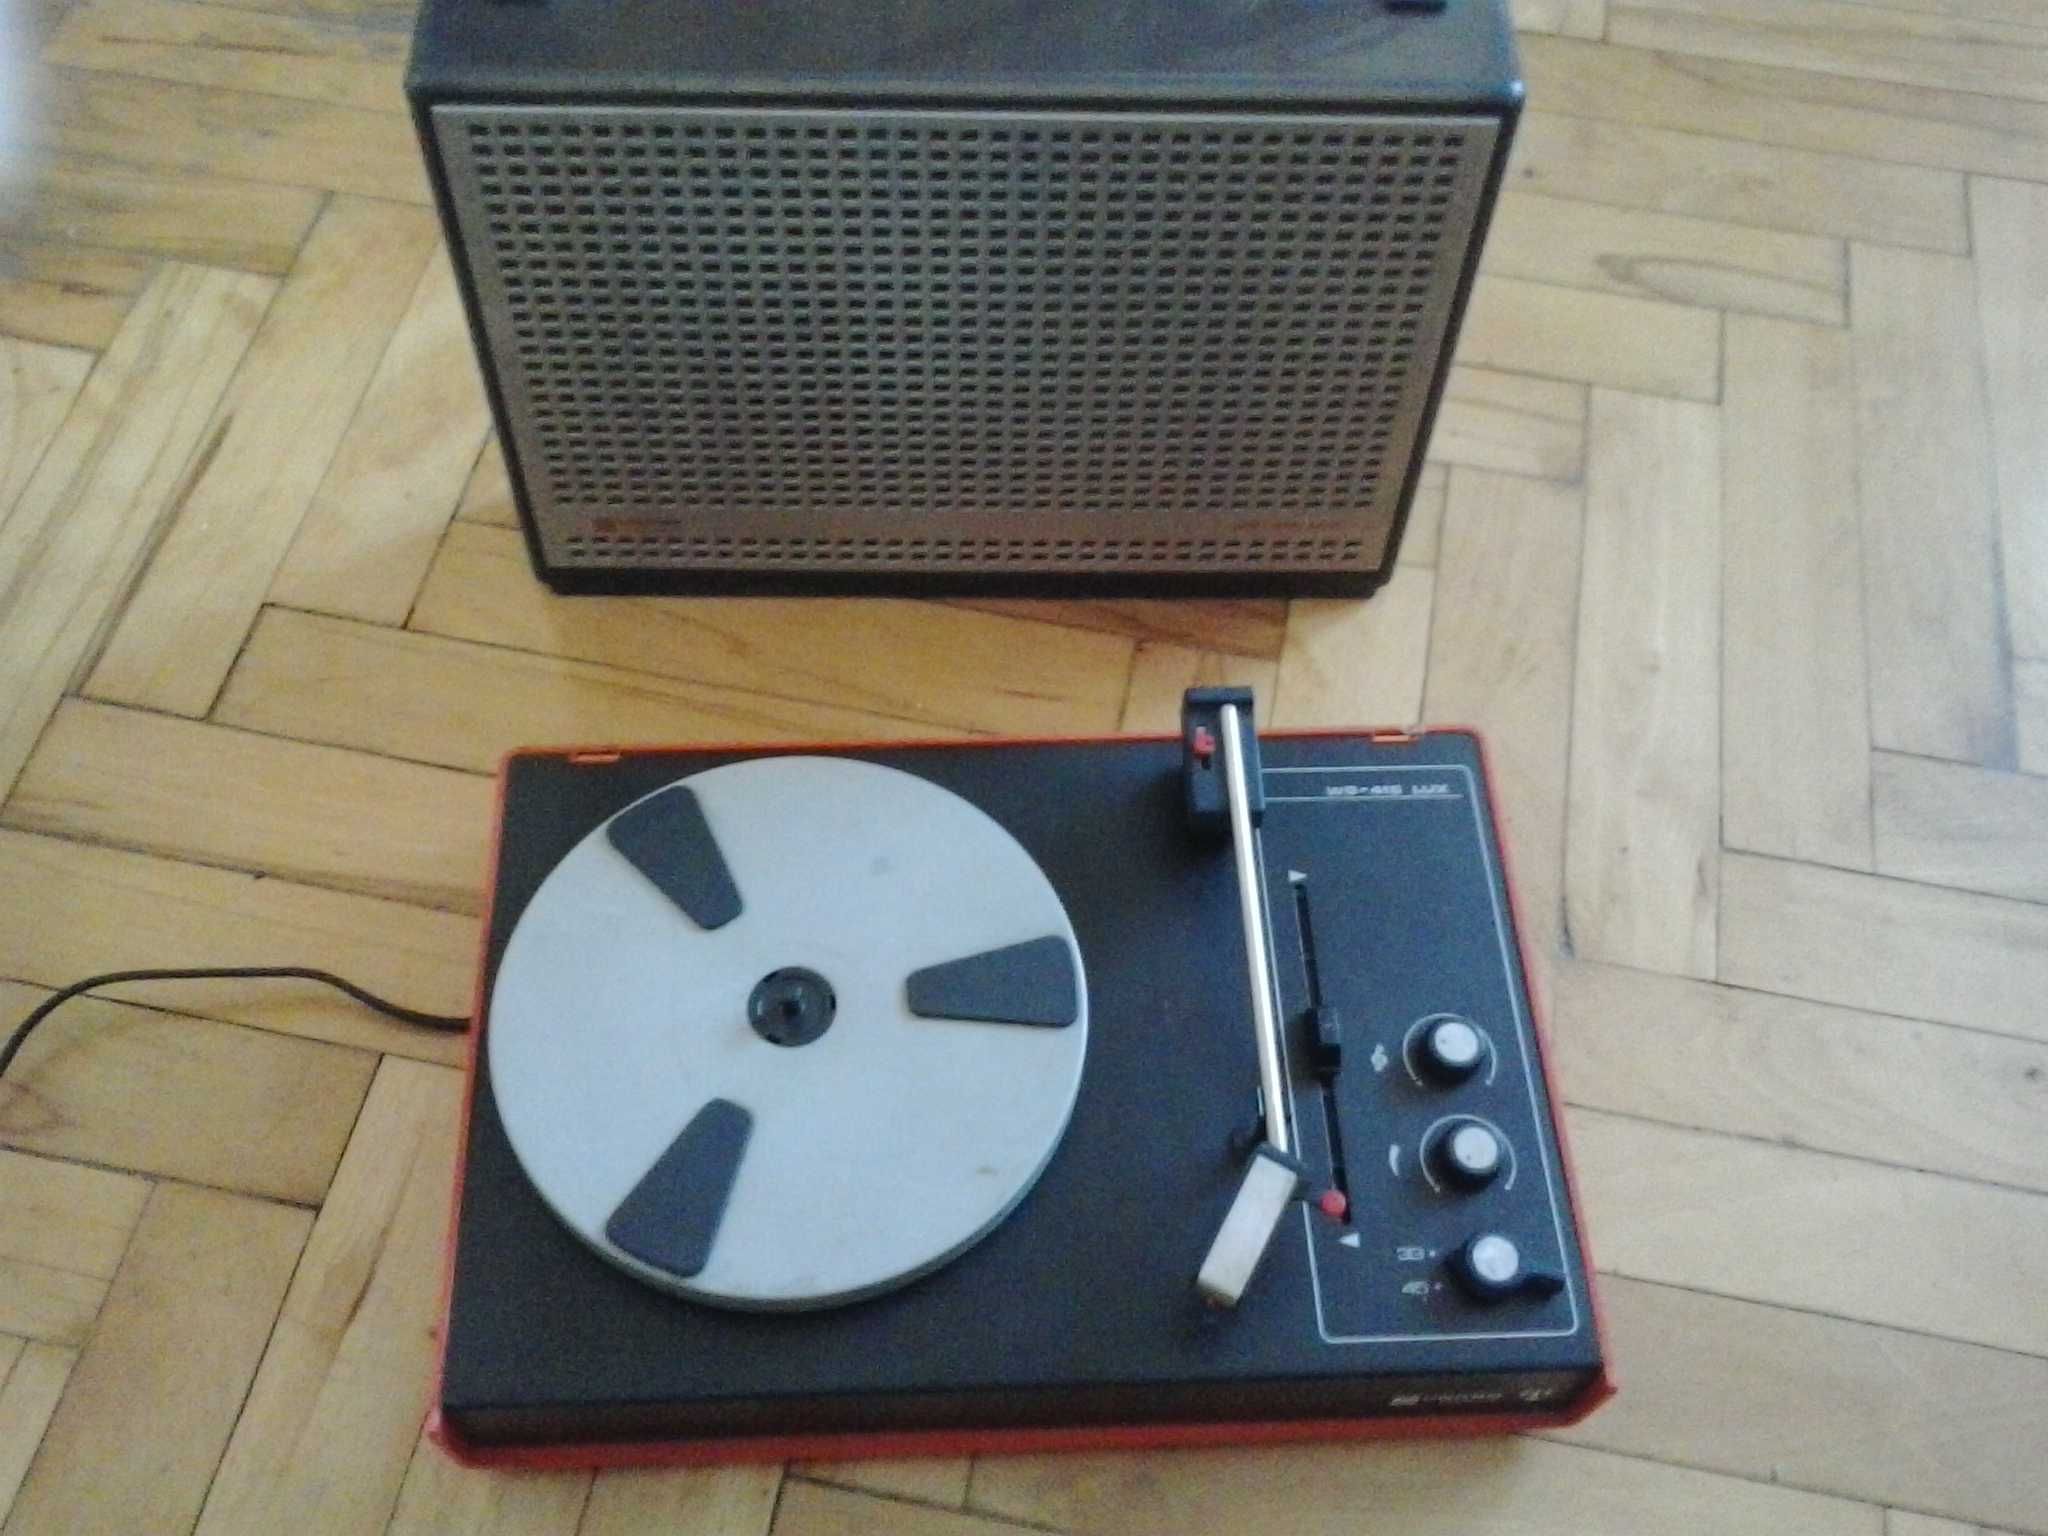 Instrukcja obsługi gramofonu WG-415 Lux, Unitra Fonica - kopia